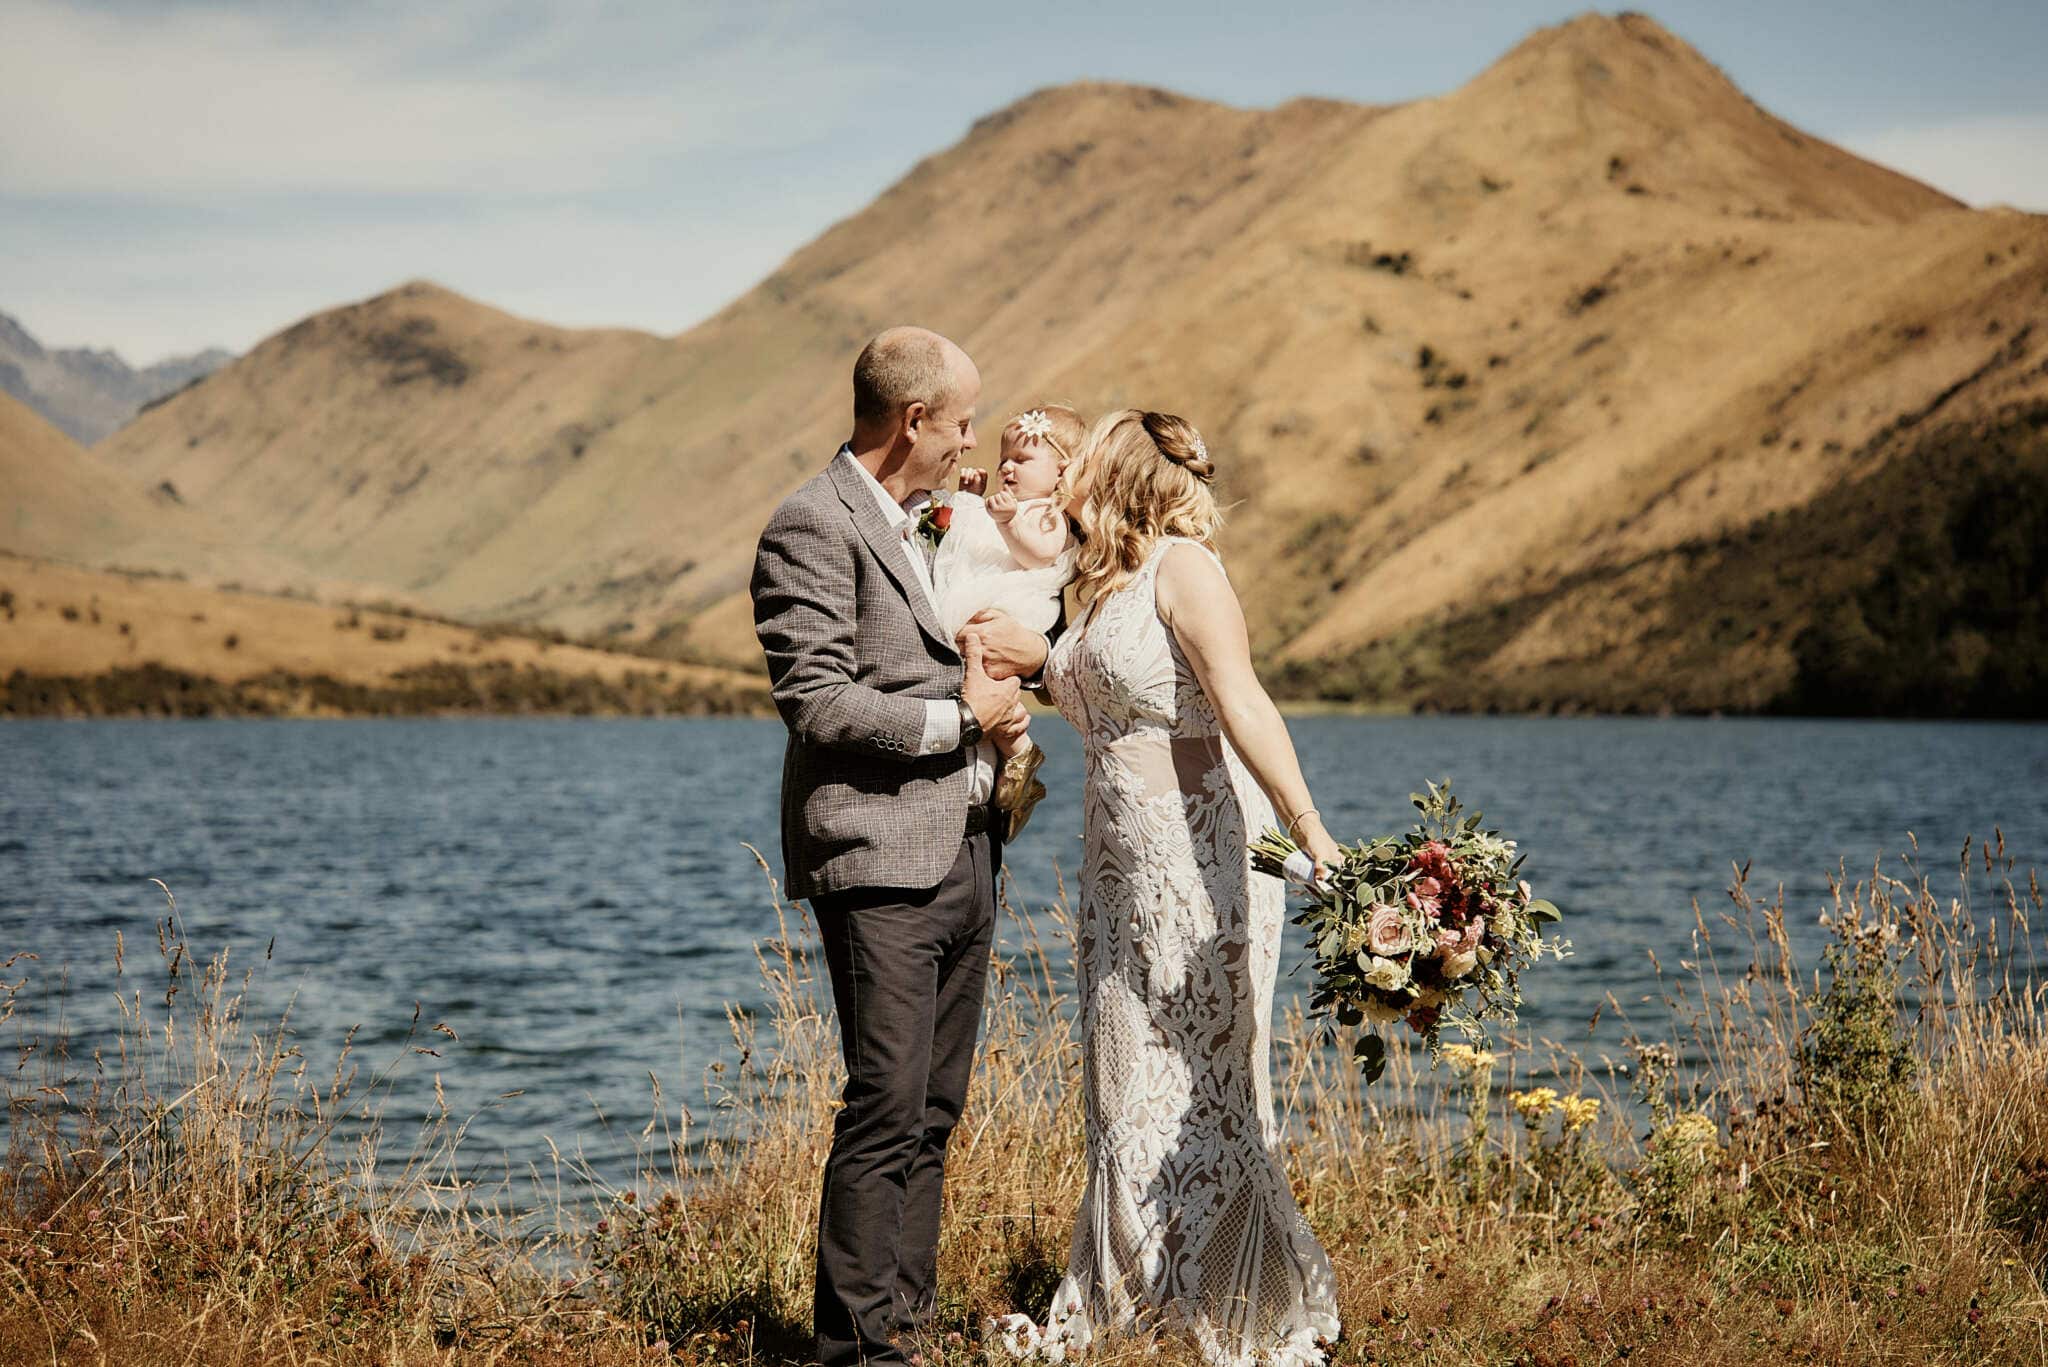 Lianne & Kristof's Moke Lake Queenstown NZ Elopement Wedding - New Zealand Wedding Photographer